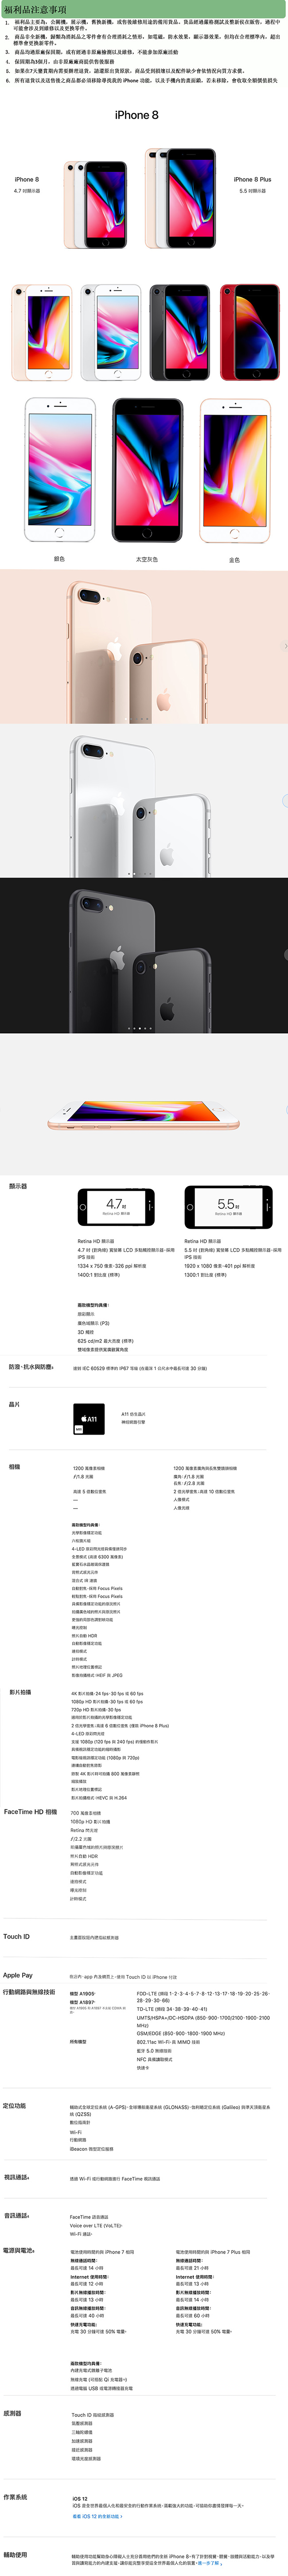 Apple iPhone 8 64g 9成5新 限量福利品